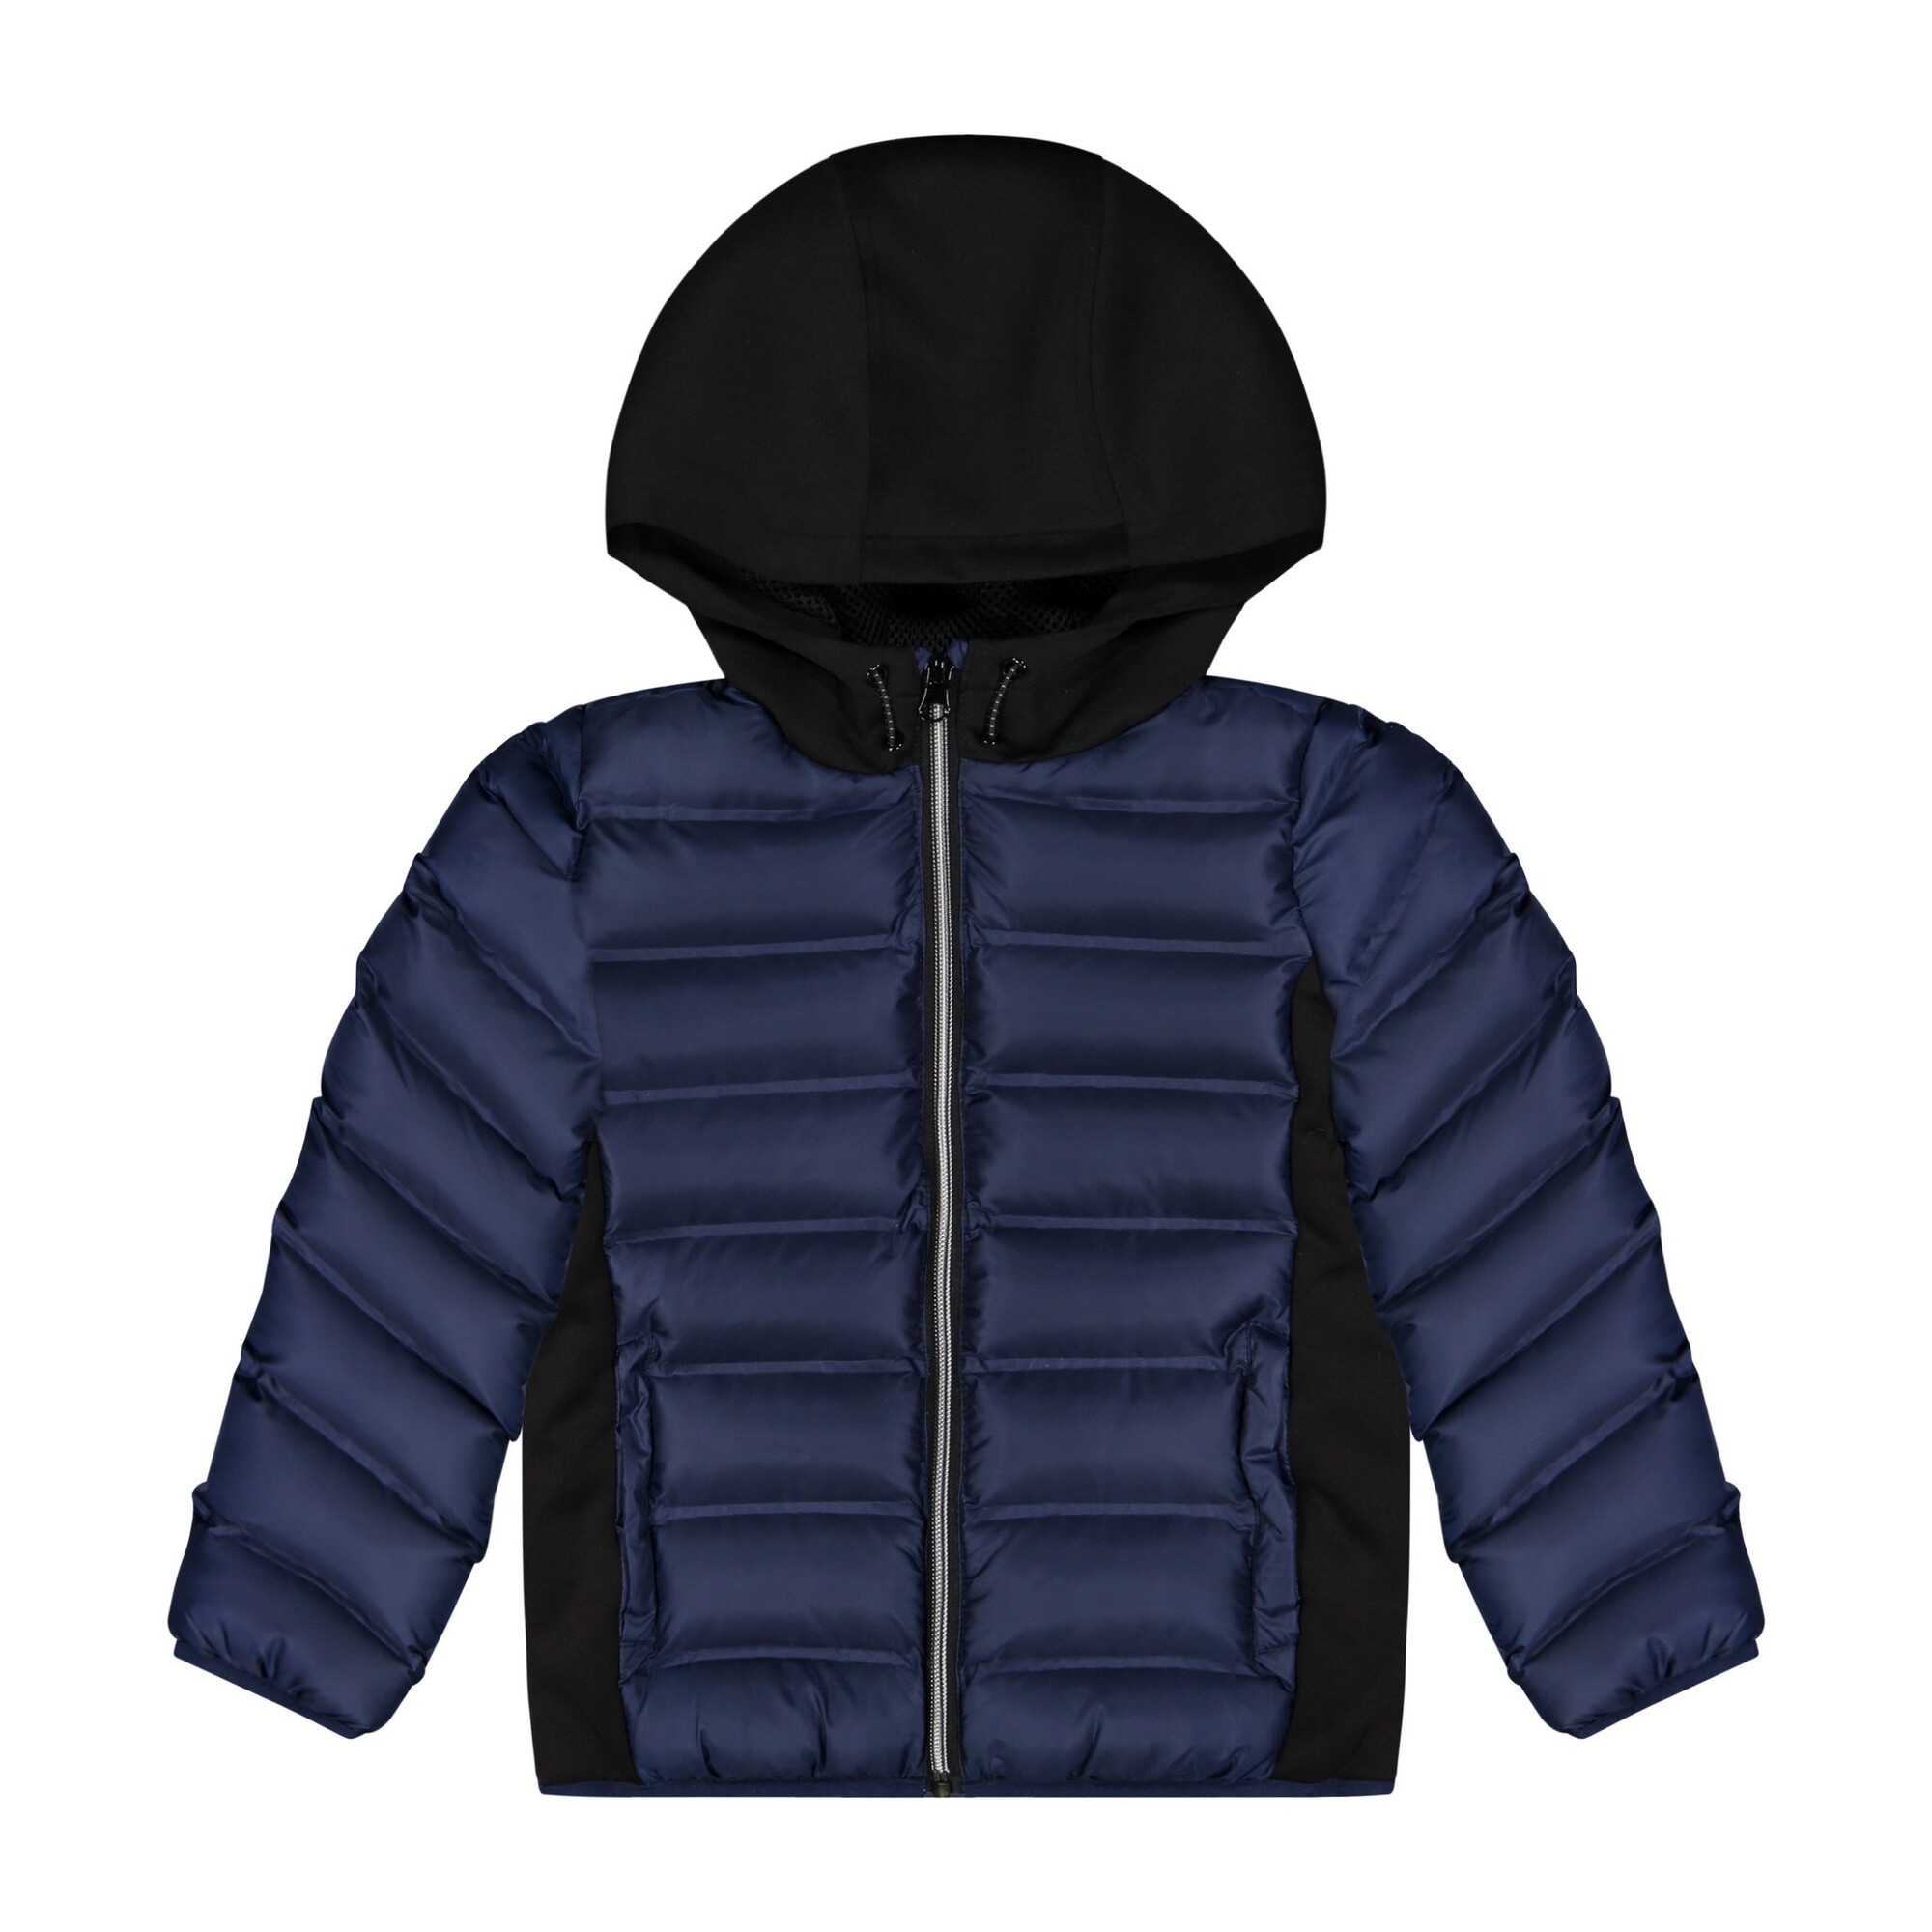 Blue Jacket, Navy - Kids Boy Clothing Outerwear - Maisonette